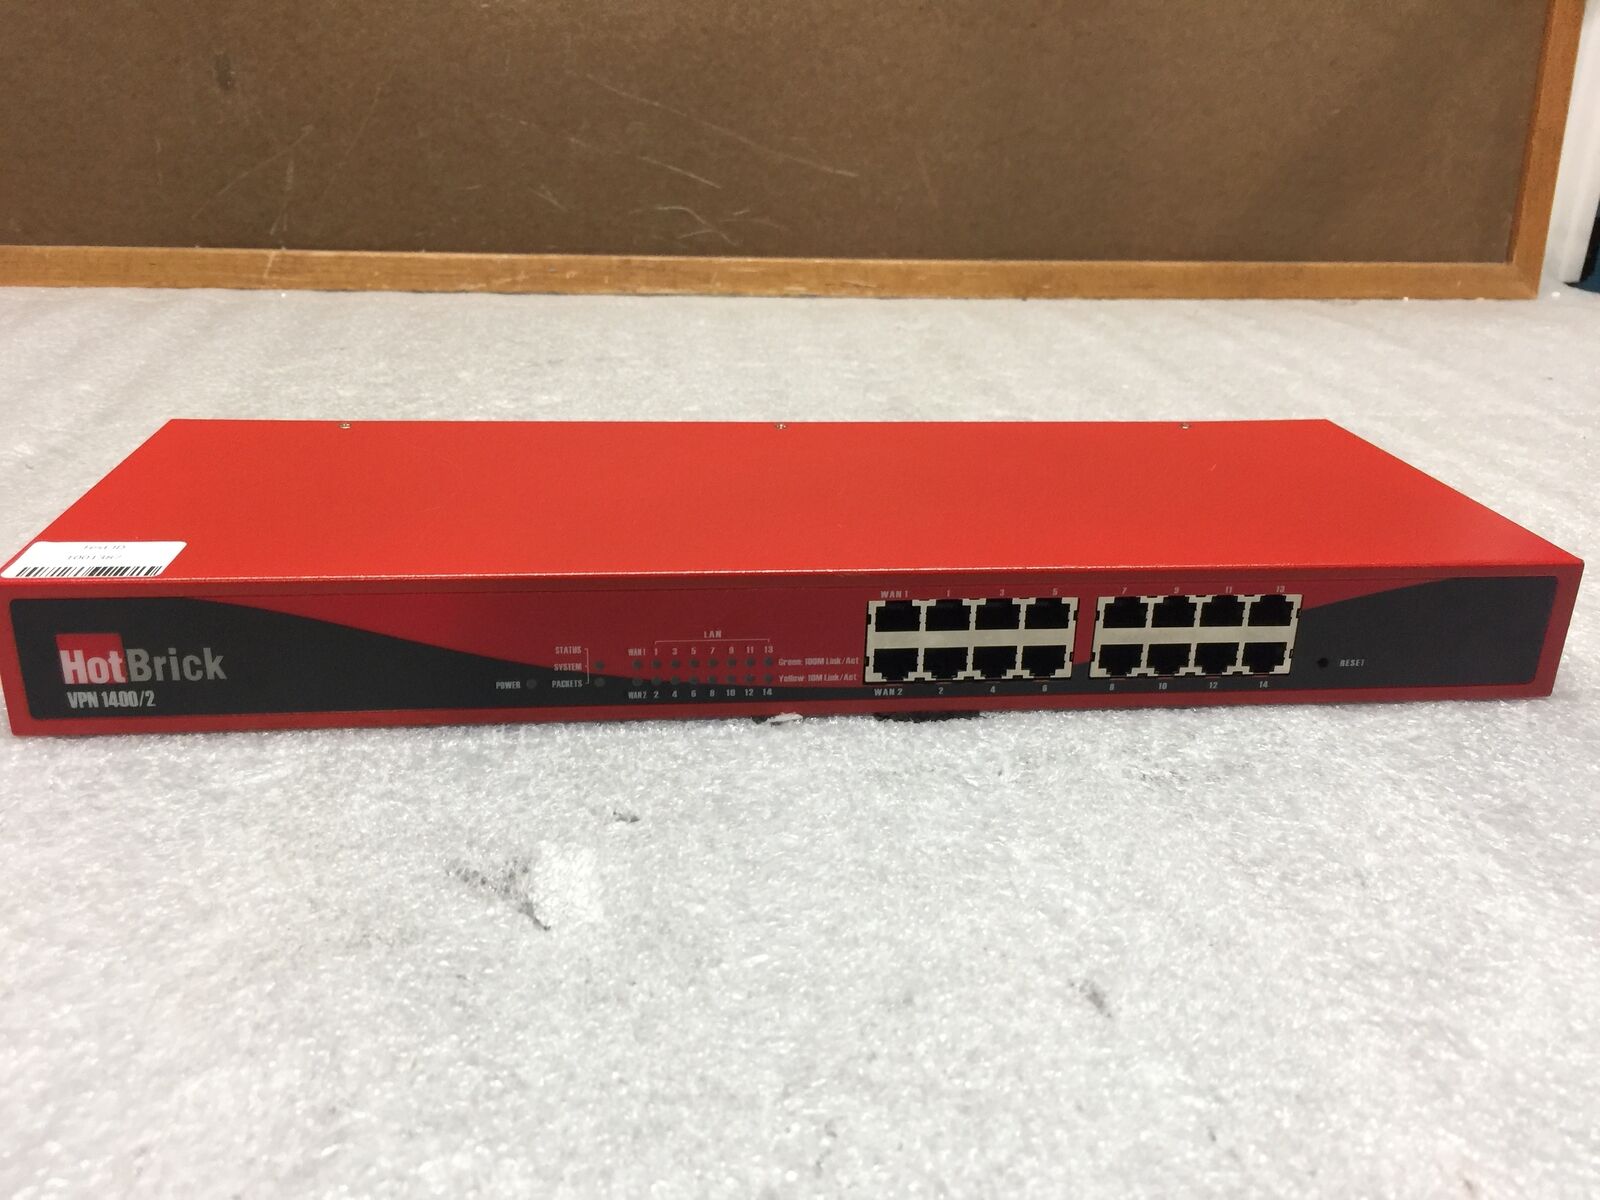 Hotbrick Lb-2vpn Firewall Dual Wan Router Lb-2vpn, Tested / Working / Reset